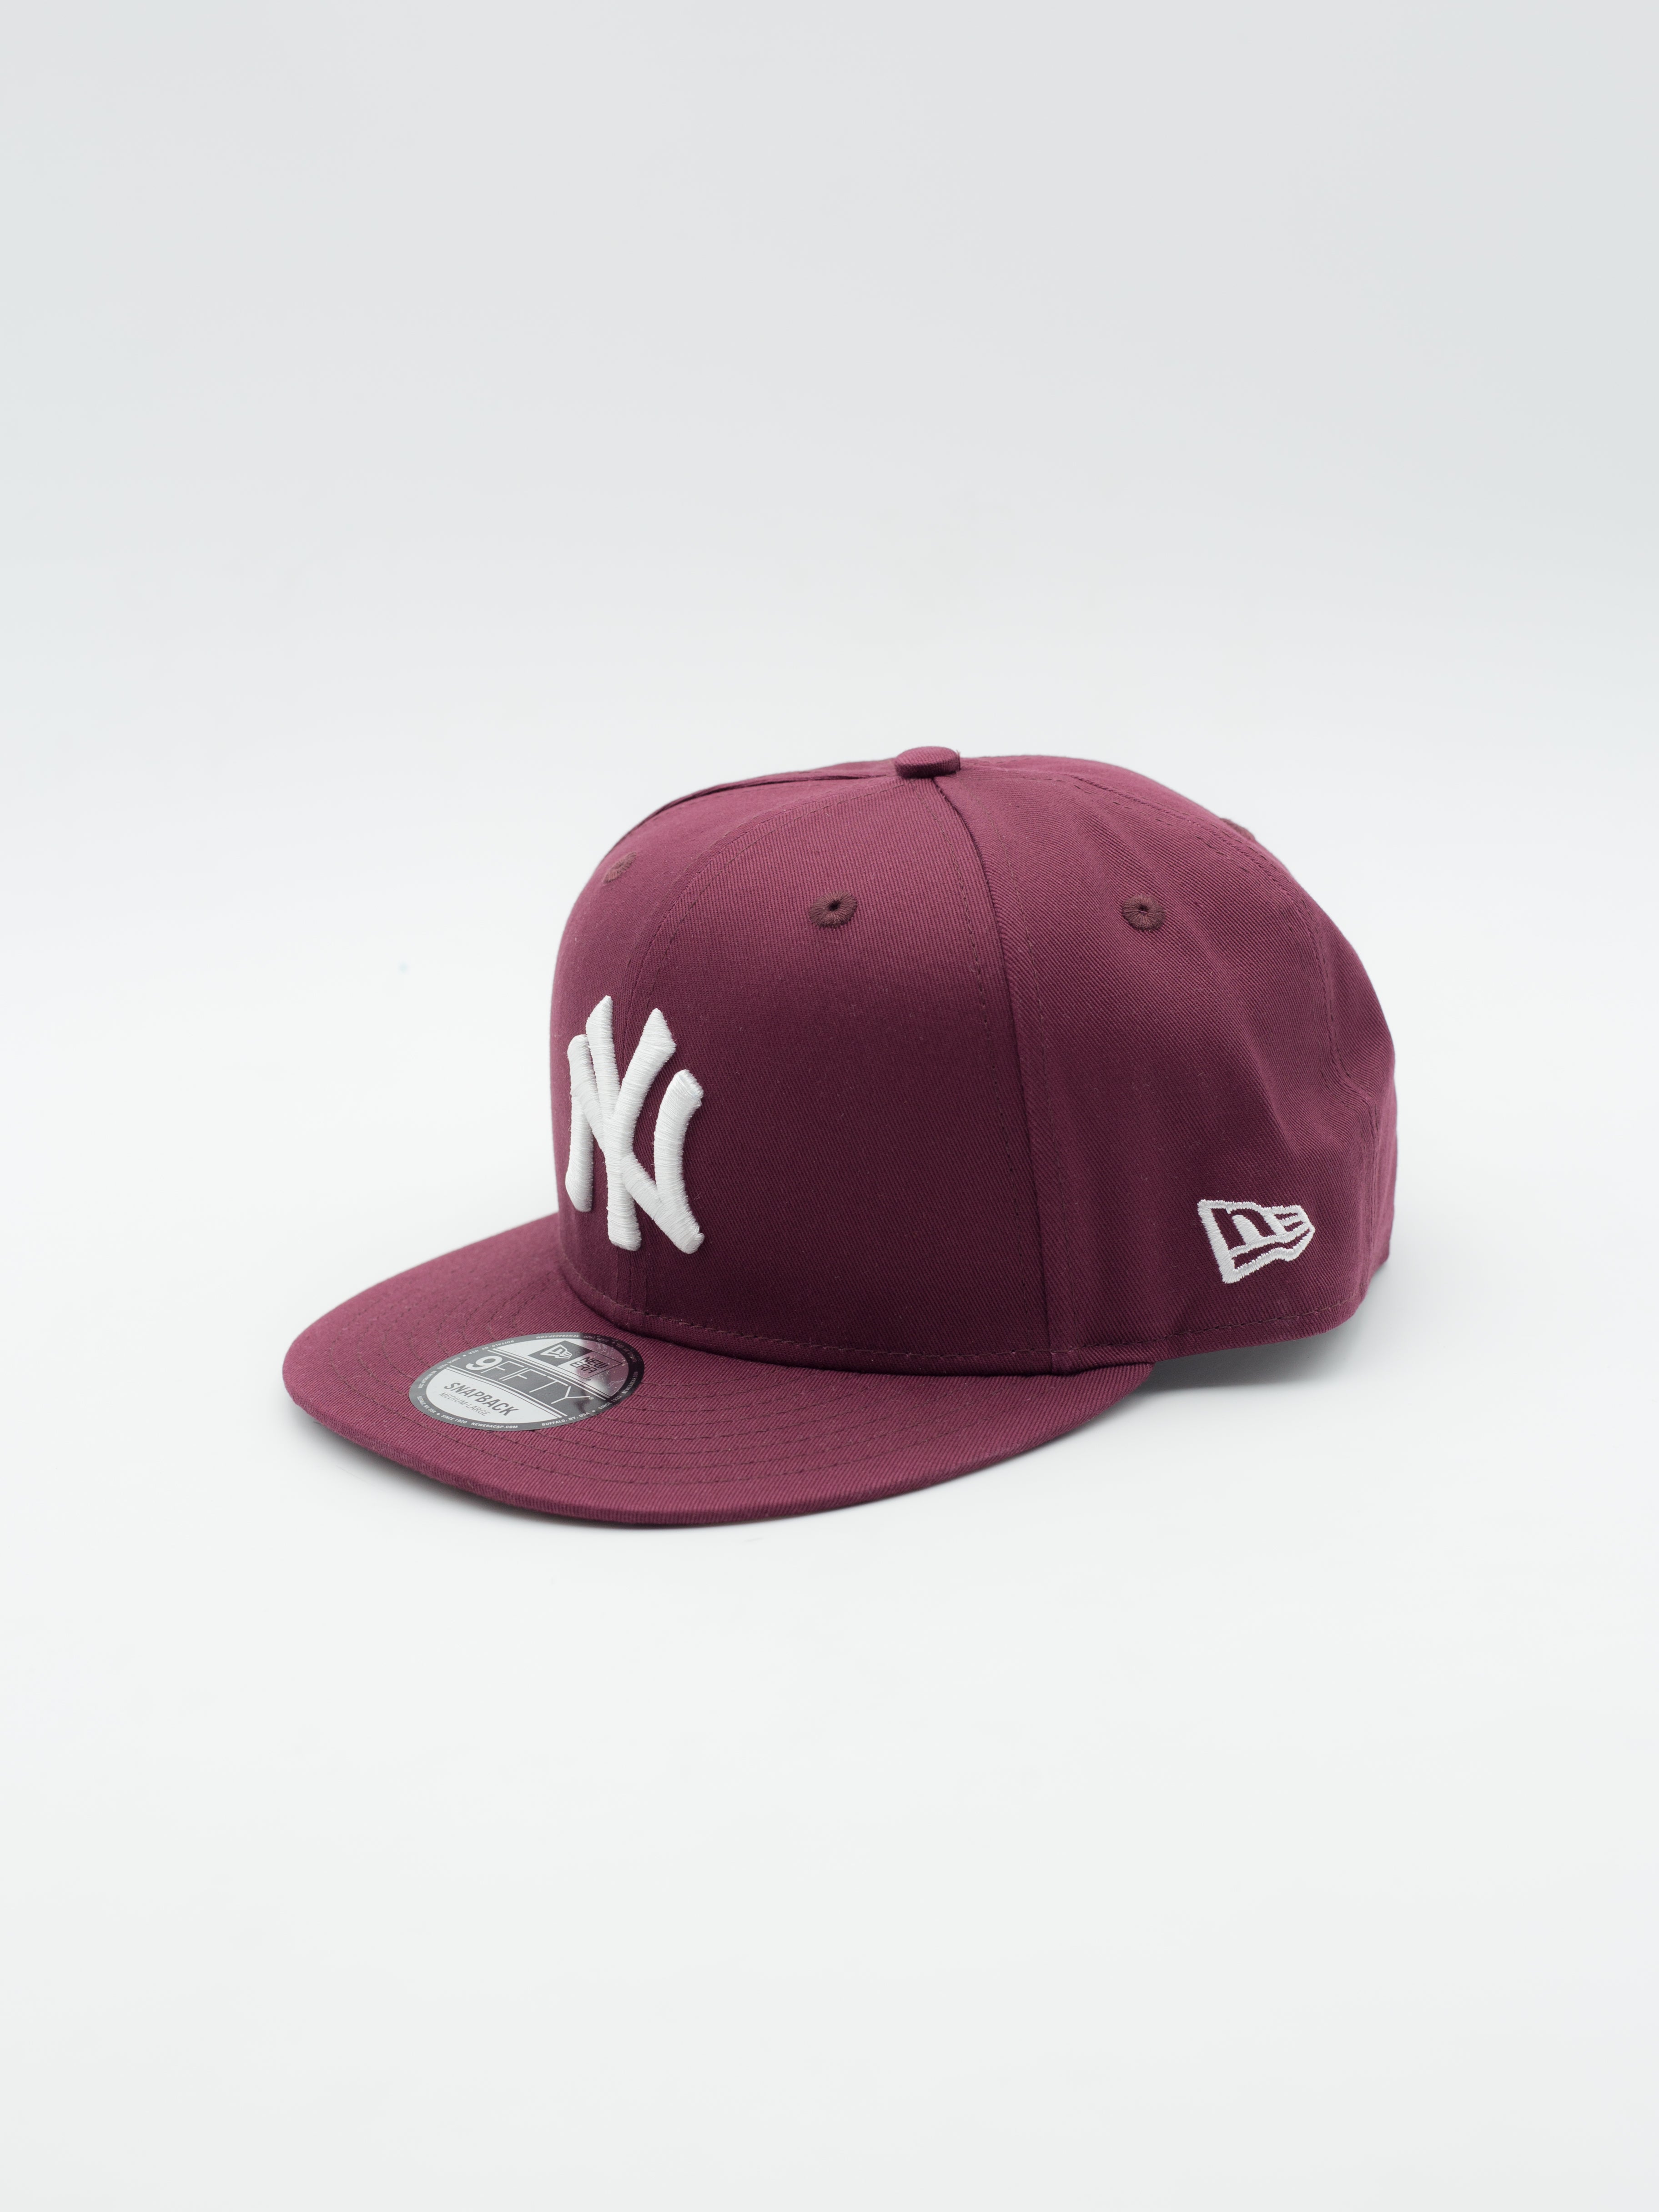 9FIFTY League Essential New York Yankees Snapback Maroon